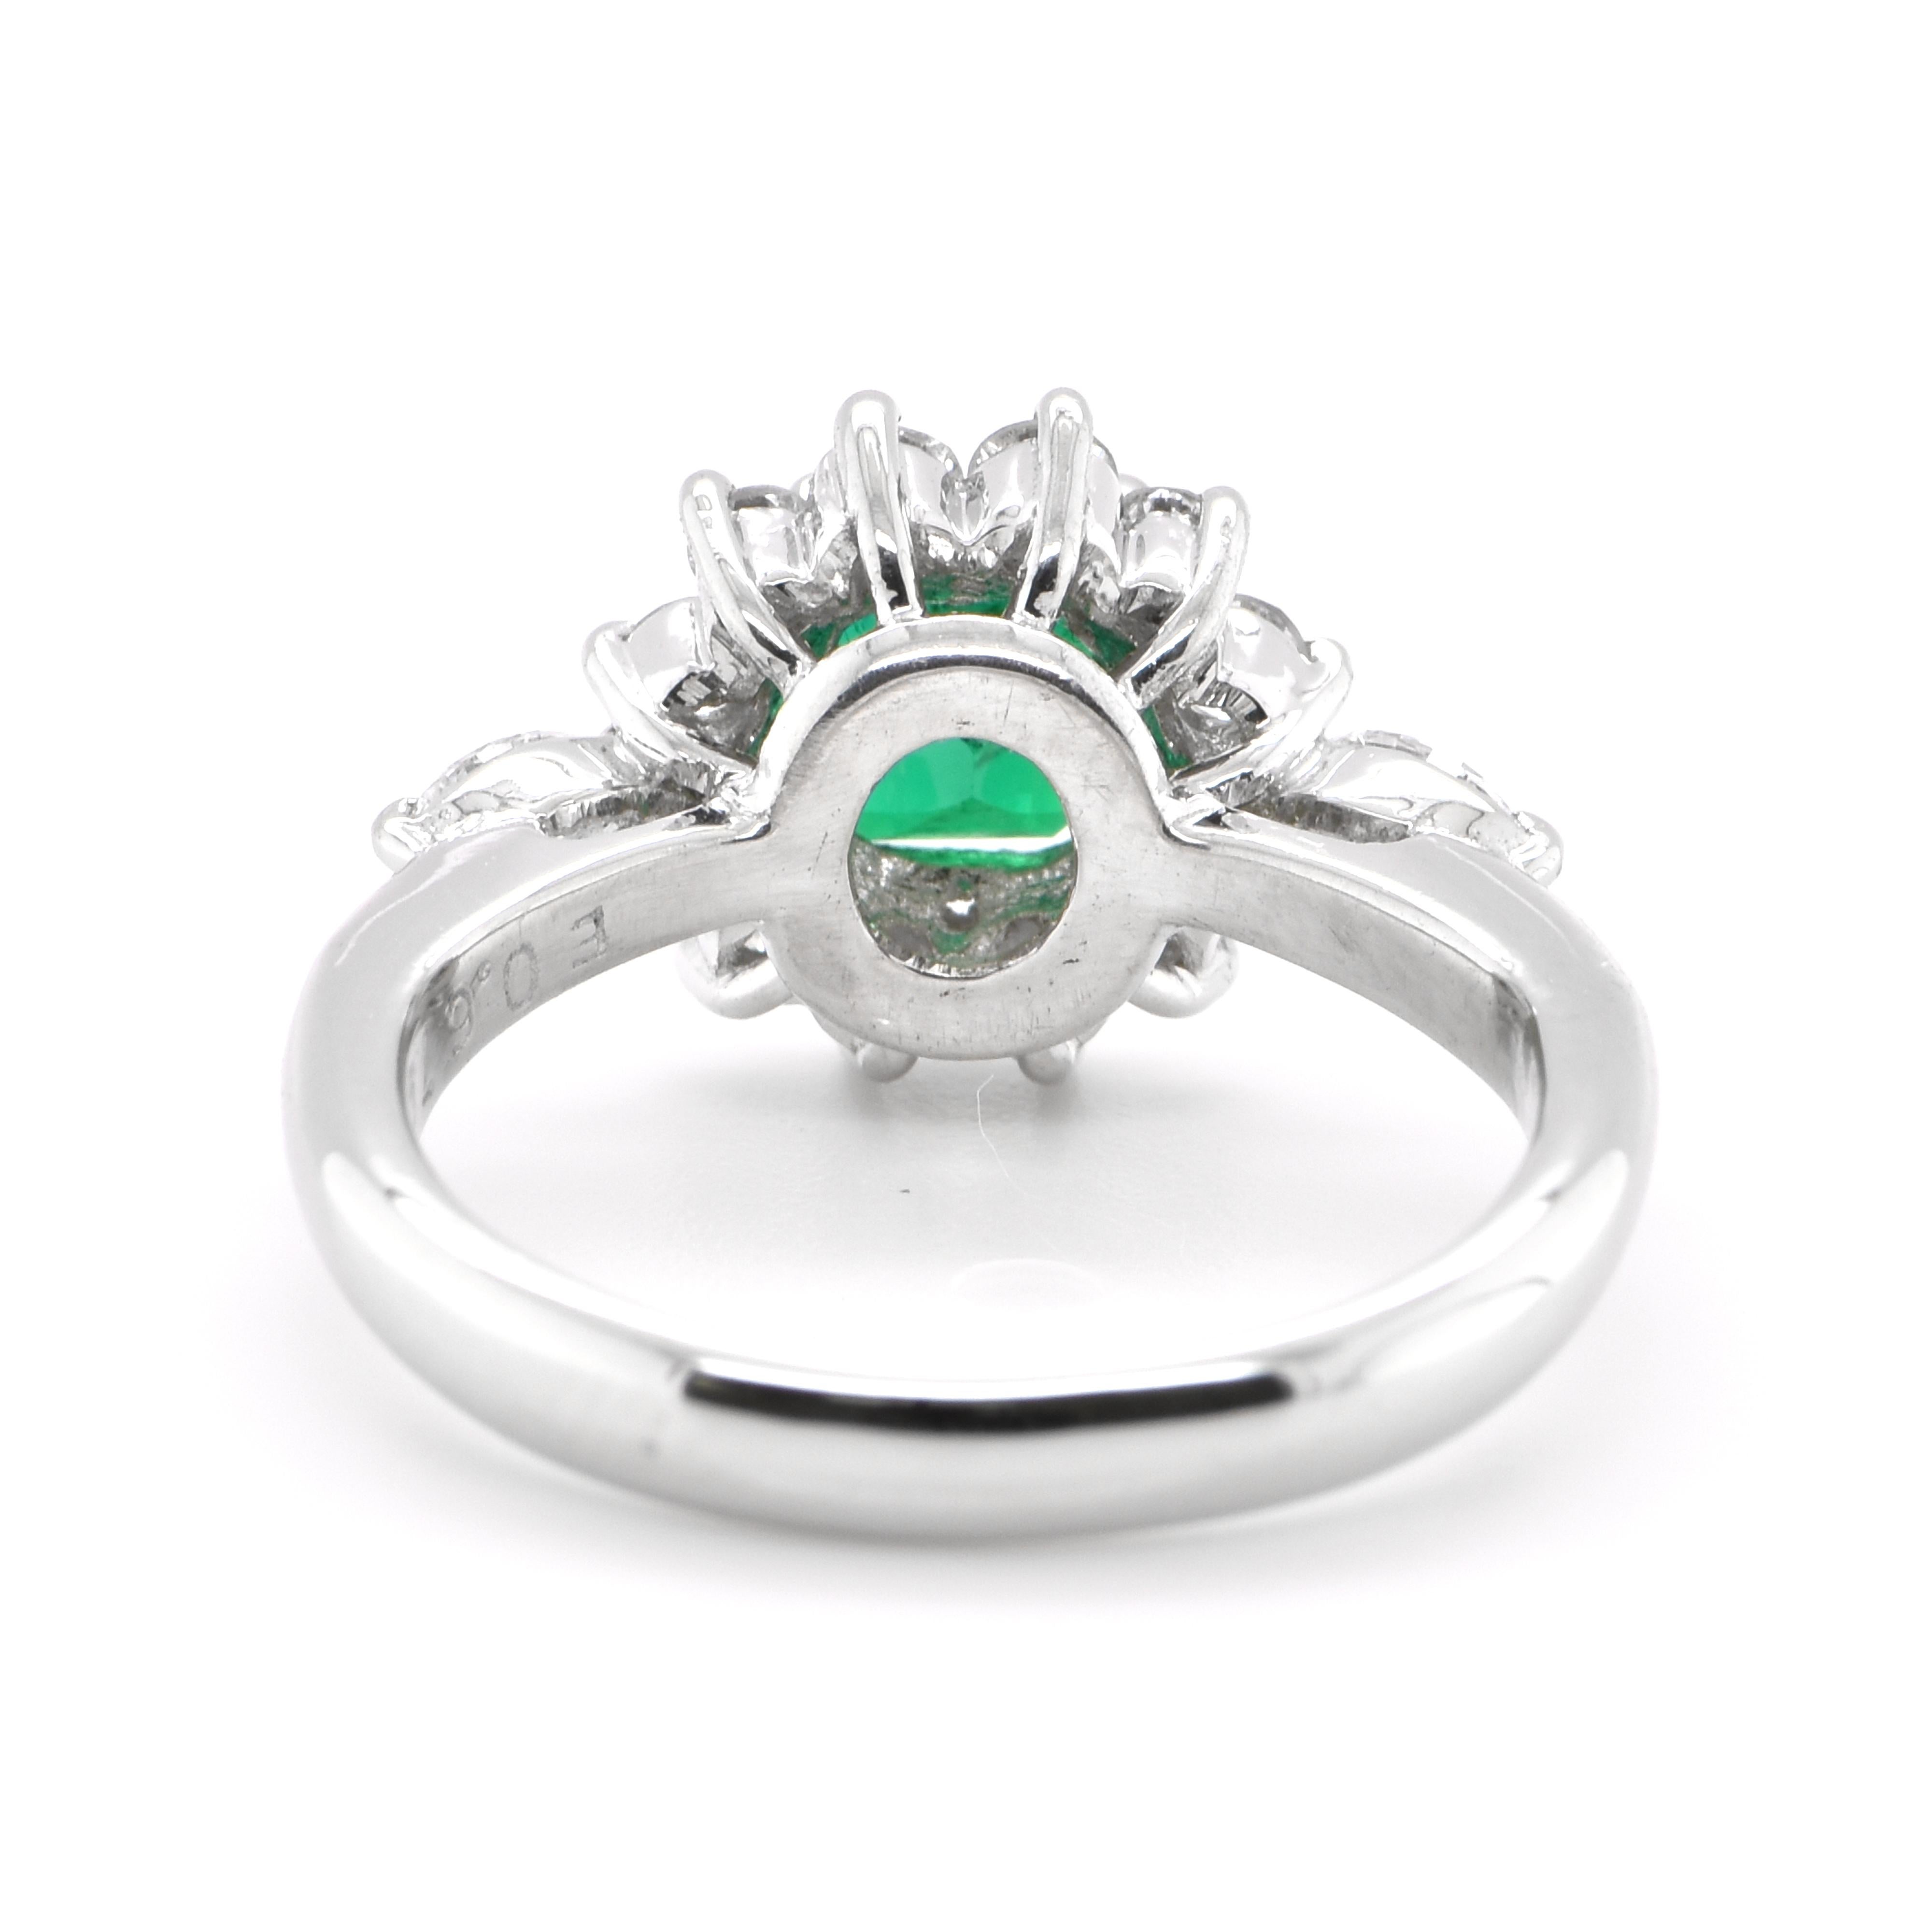 Women's 0.67 Carat Natural Emerald and Diamond Ring Set in Platinum